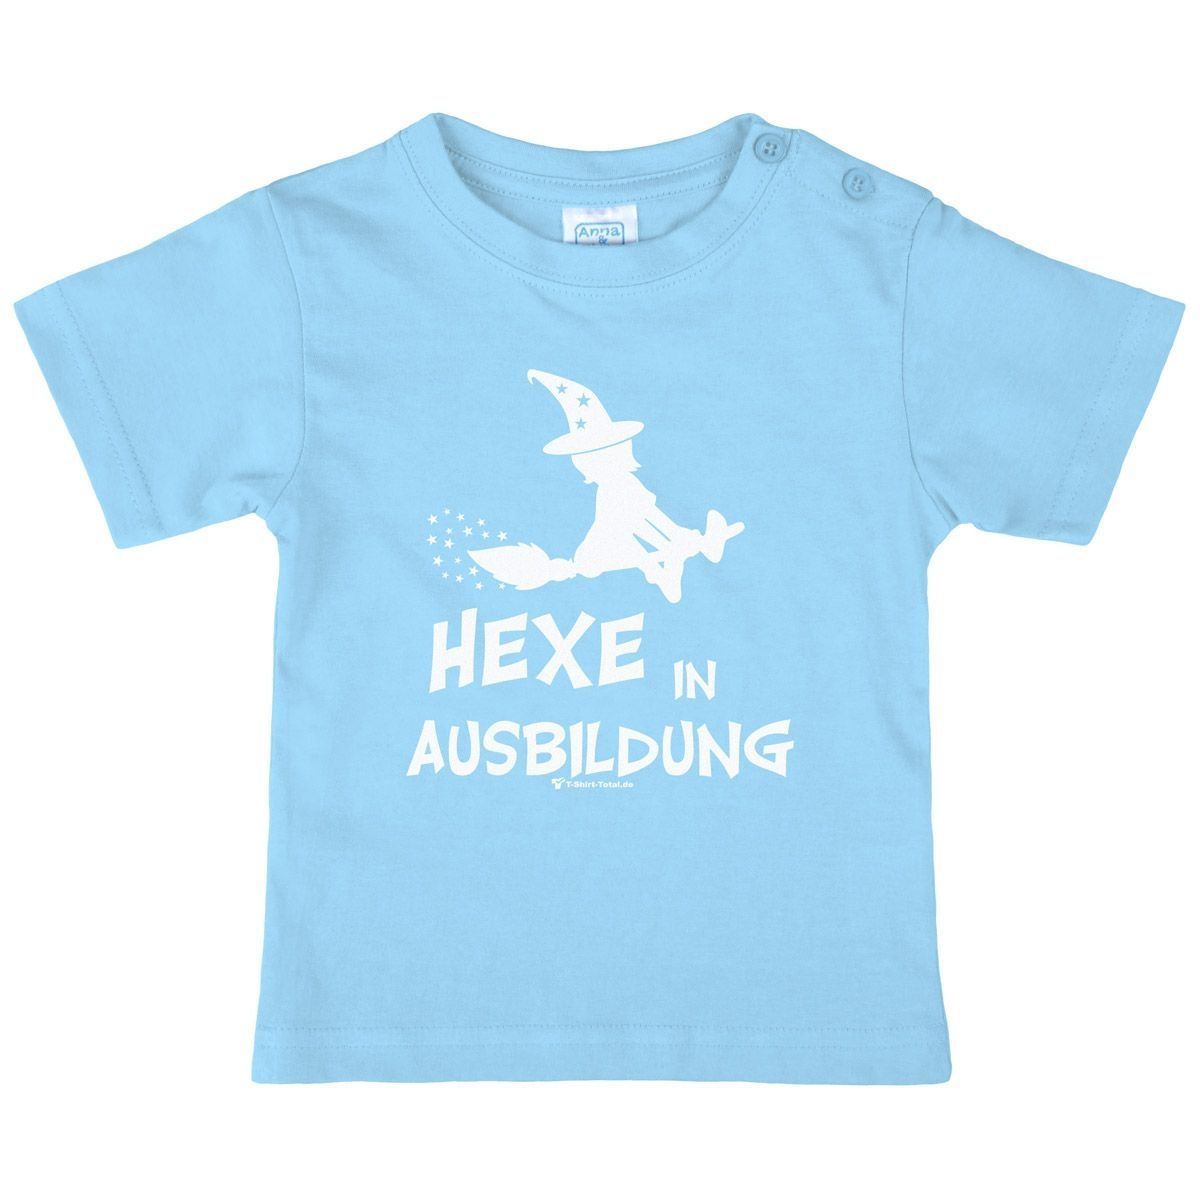 Hexe in Ausbildung Kinder T-Shirt hellblau 110 / 116